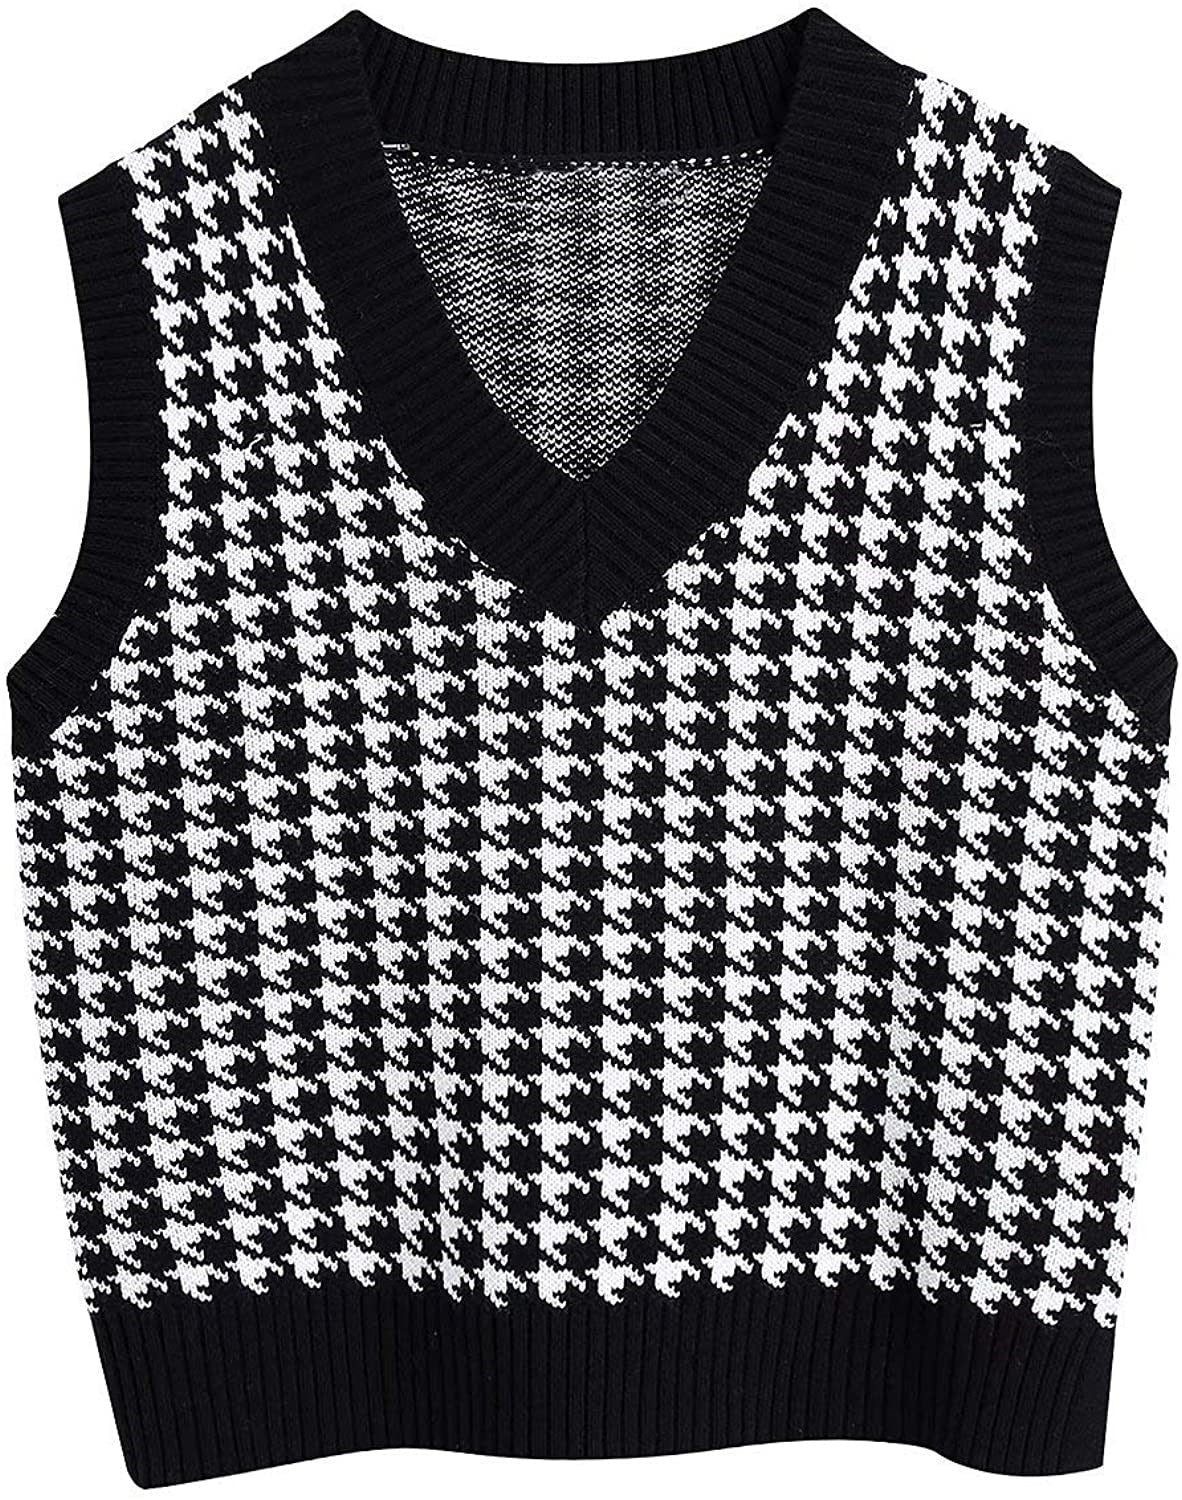 Ares - Dark Academia Houndstooth Knitted Sweater Vest - TheDarkAcademic